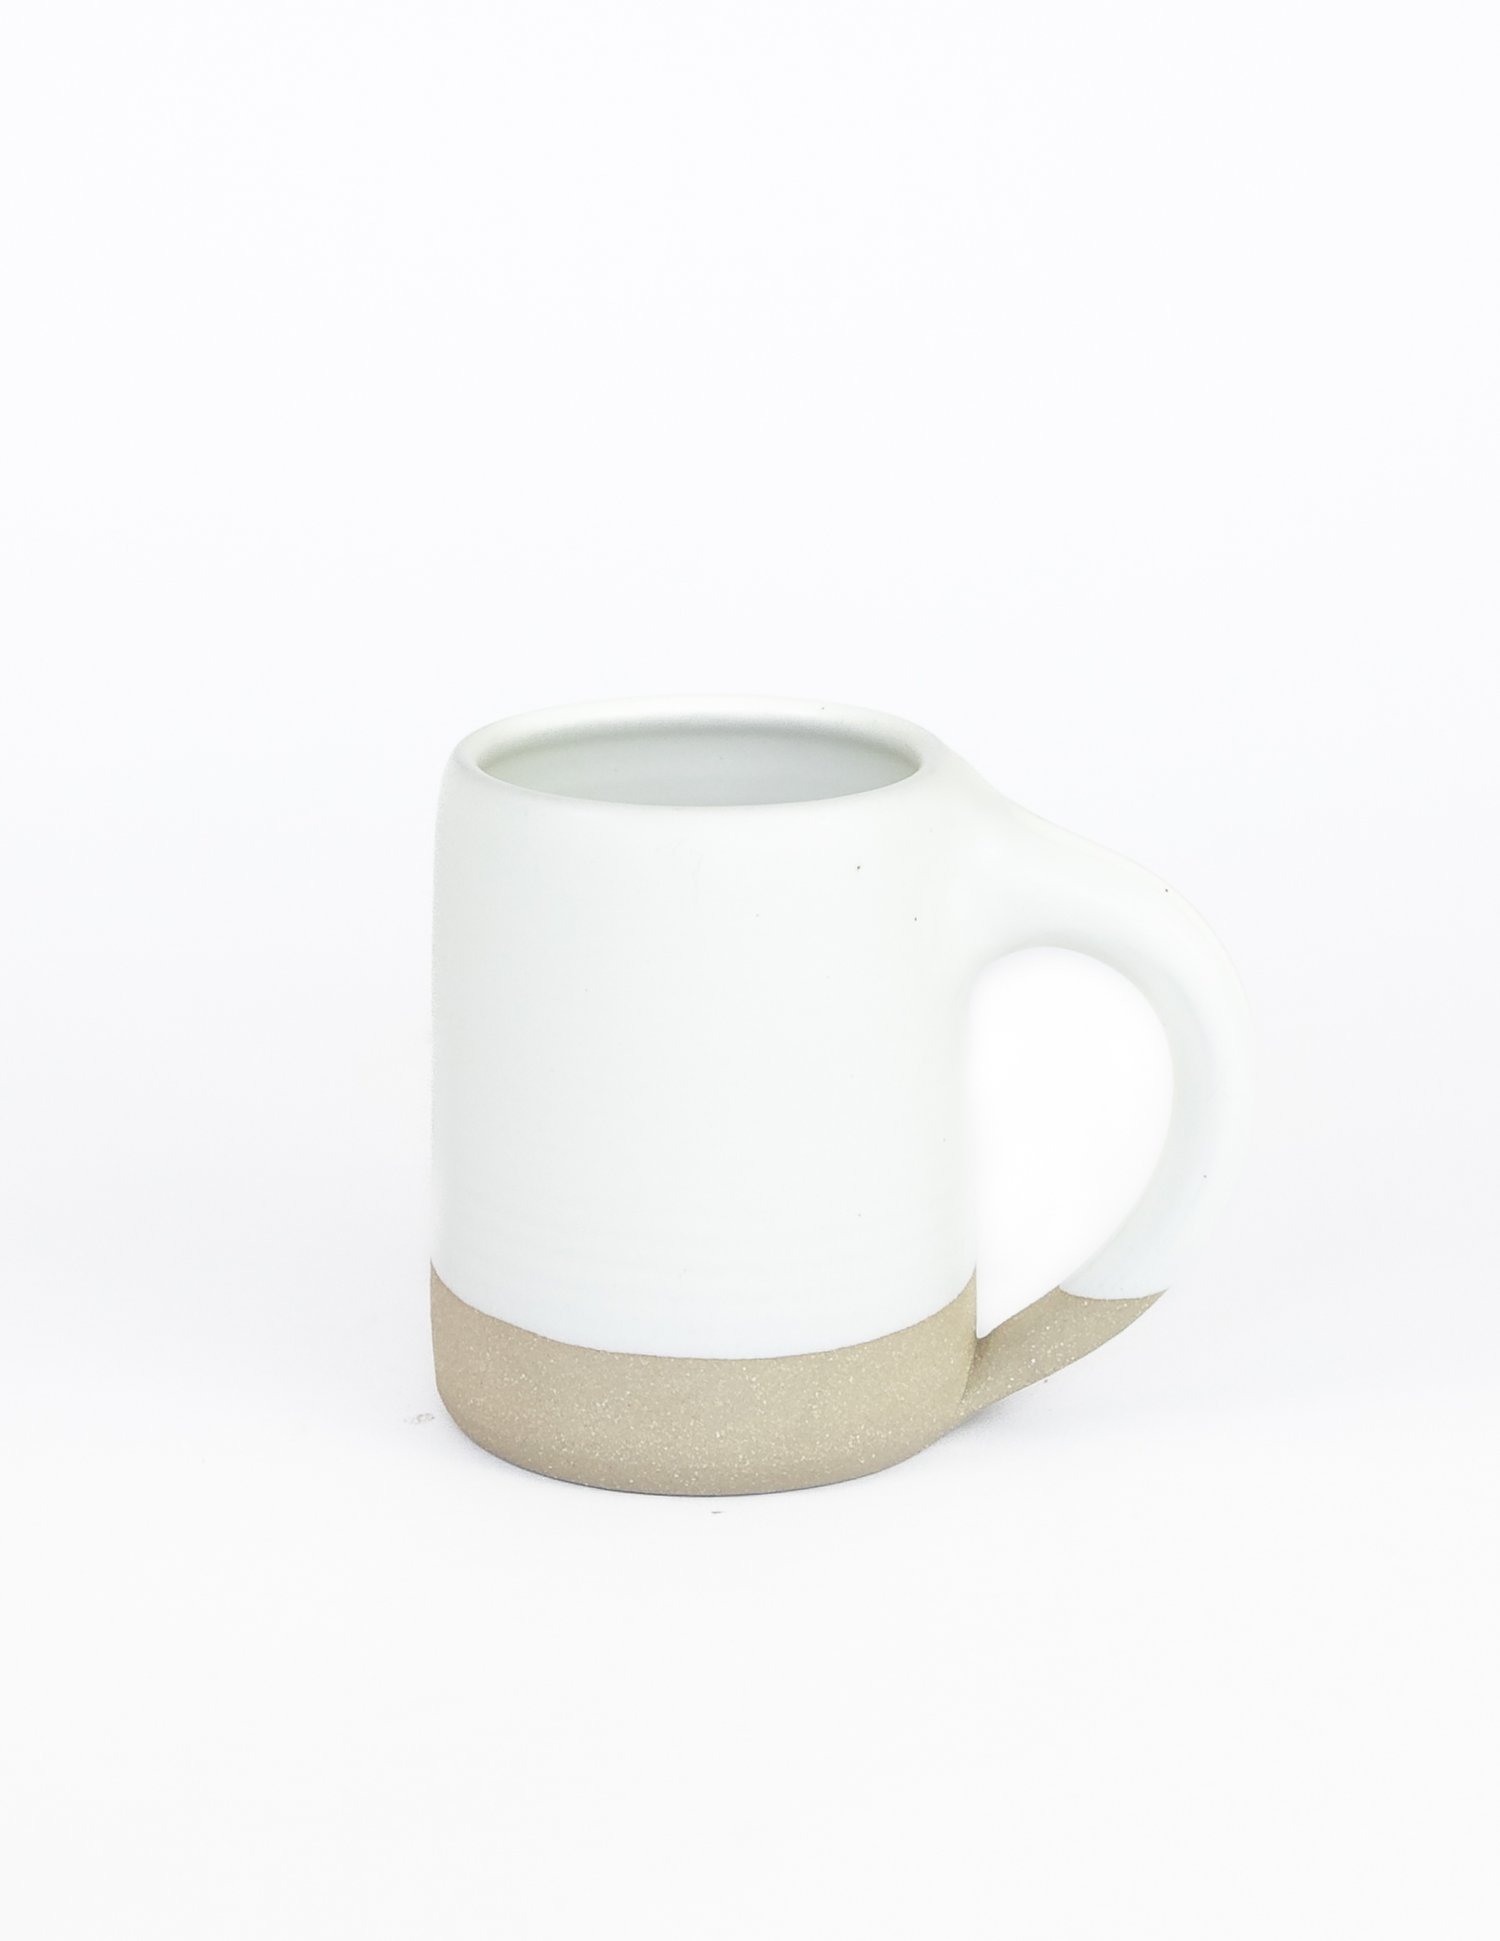 Ceramic Mug with Handle